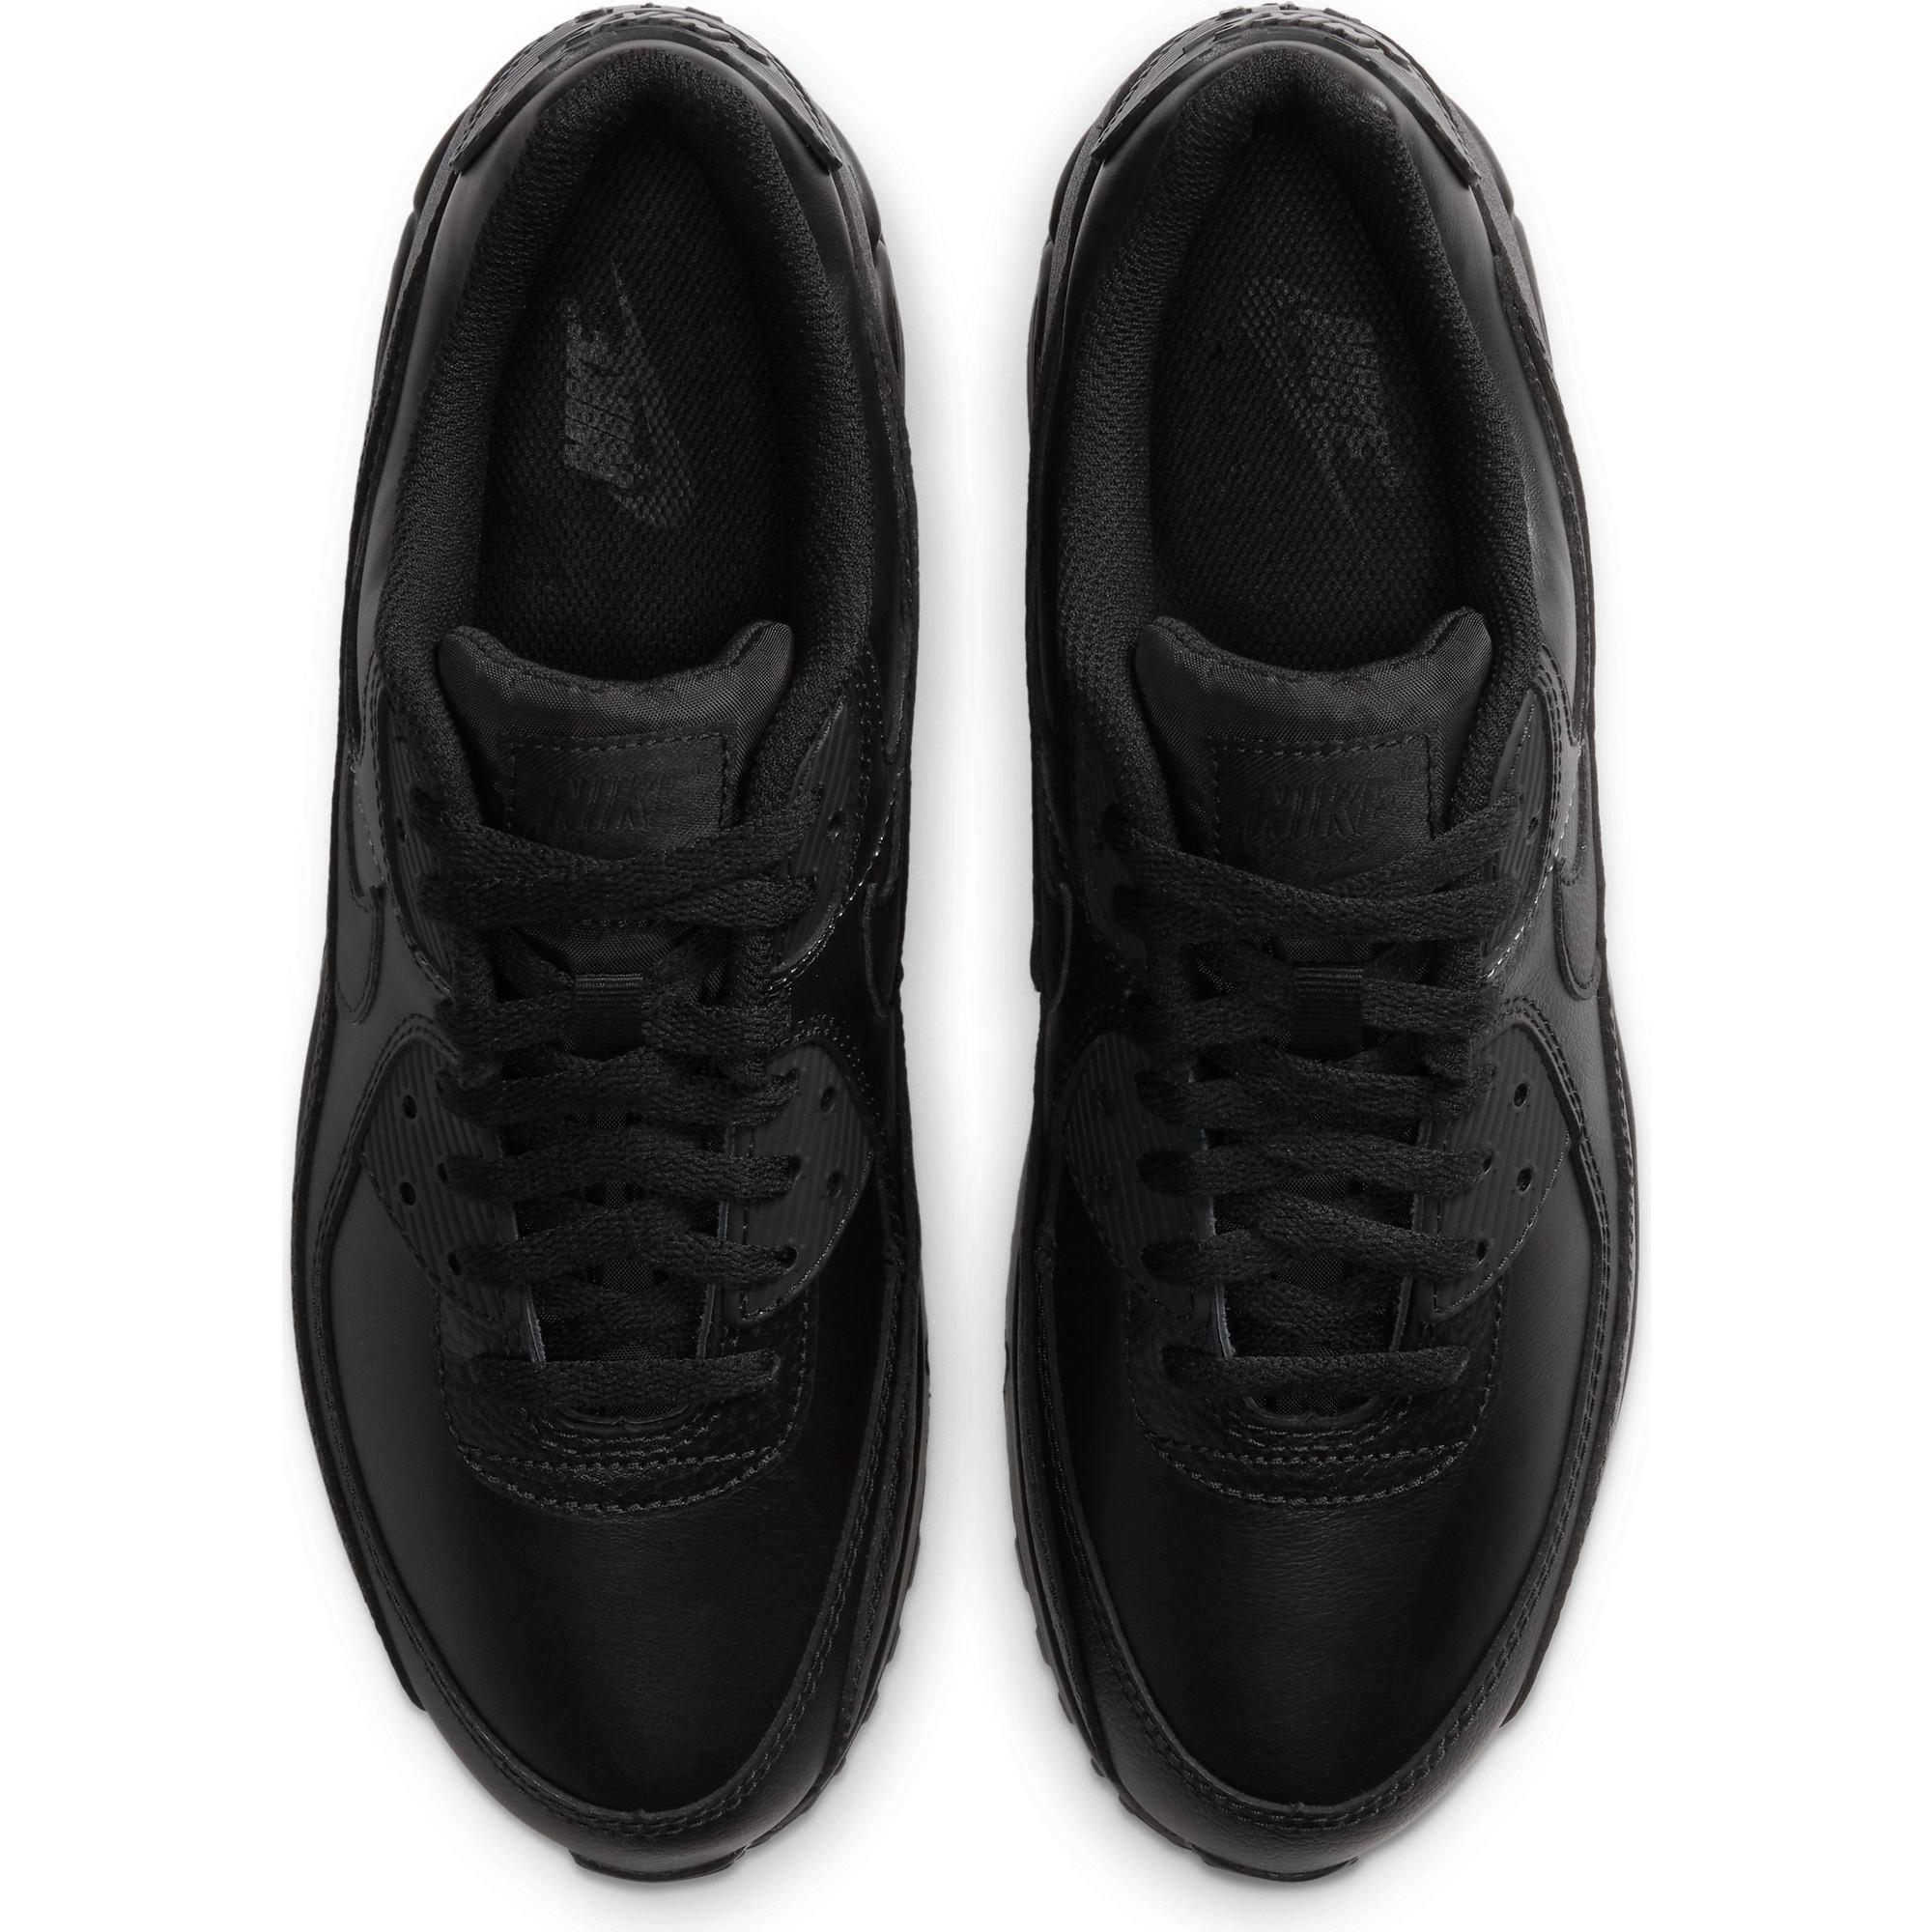 Nike Air Max 90 Premium Leather Mens Sz 9.5 Black/Black/White